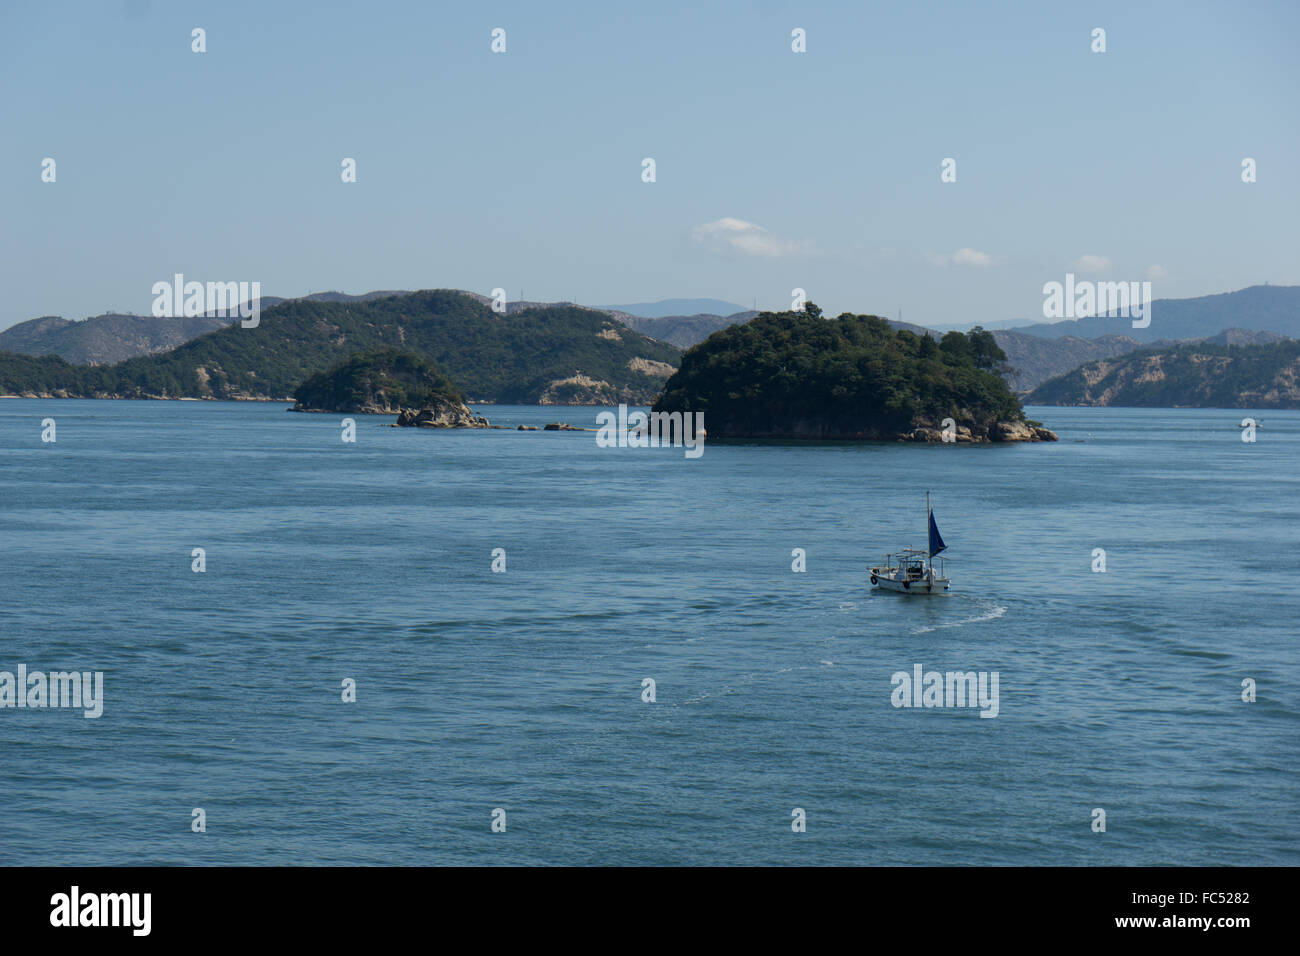 Angelboot/Fischerboot auf der Inland Sea of Japan Stockfoto